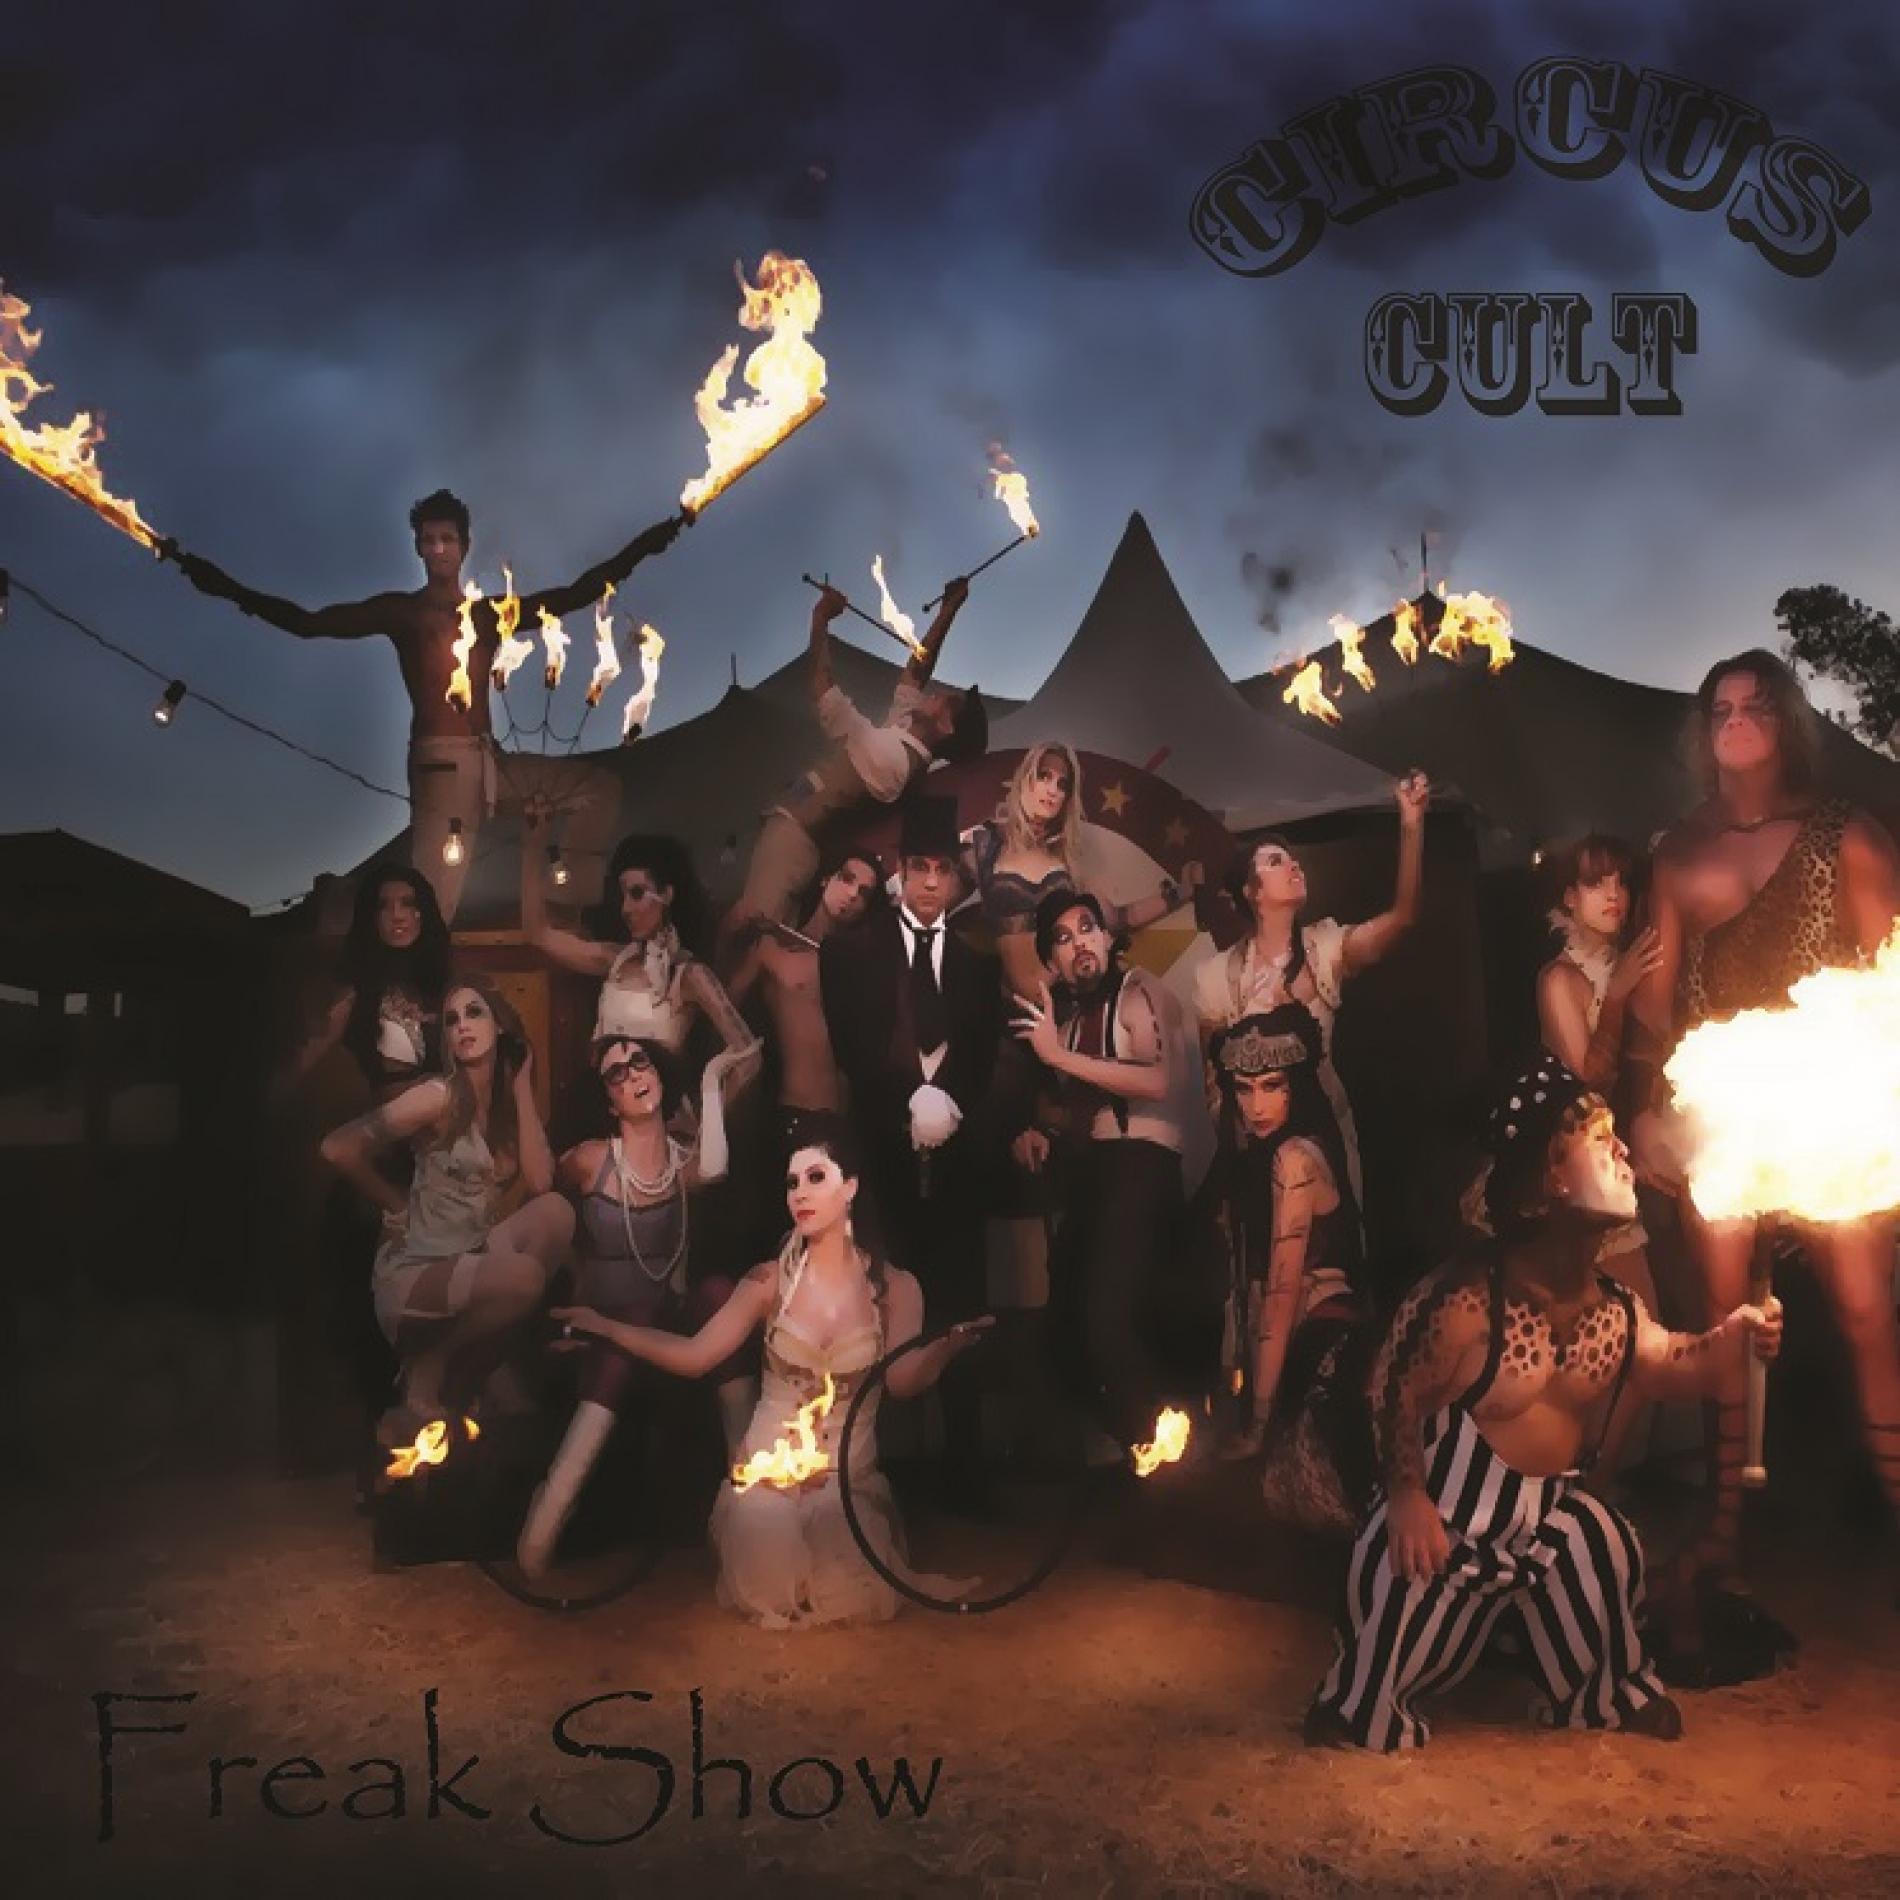 Circus Cult: The Freak Show